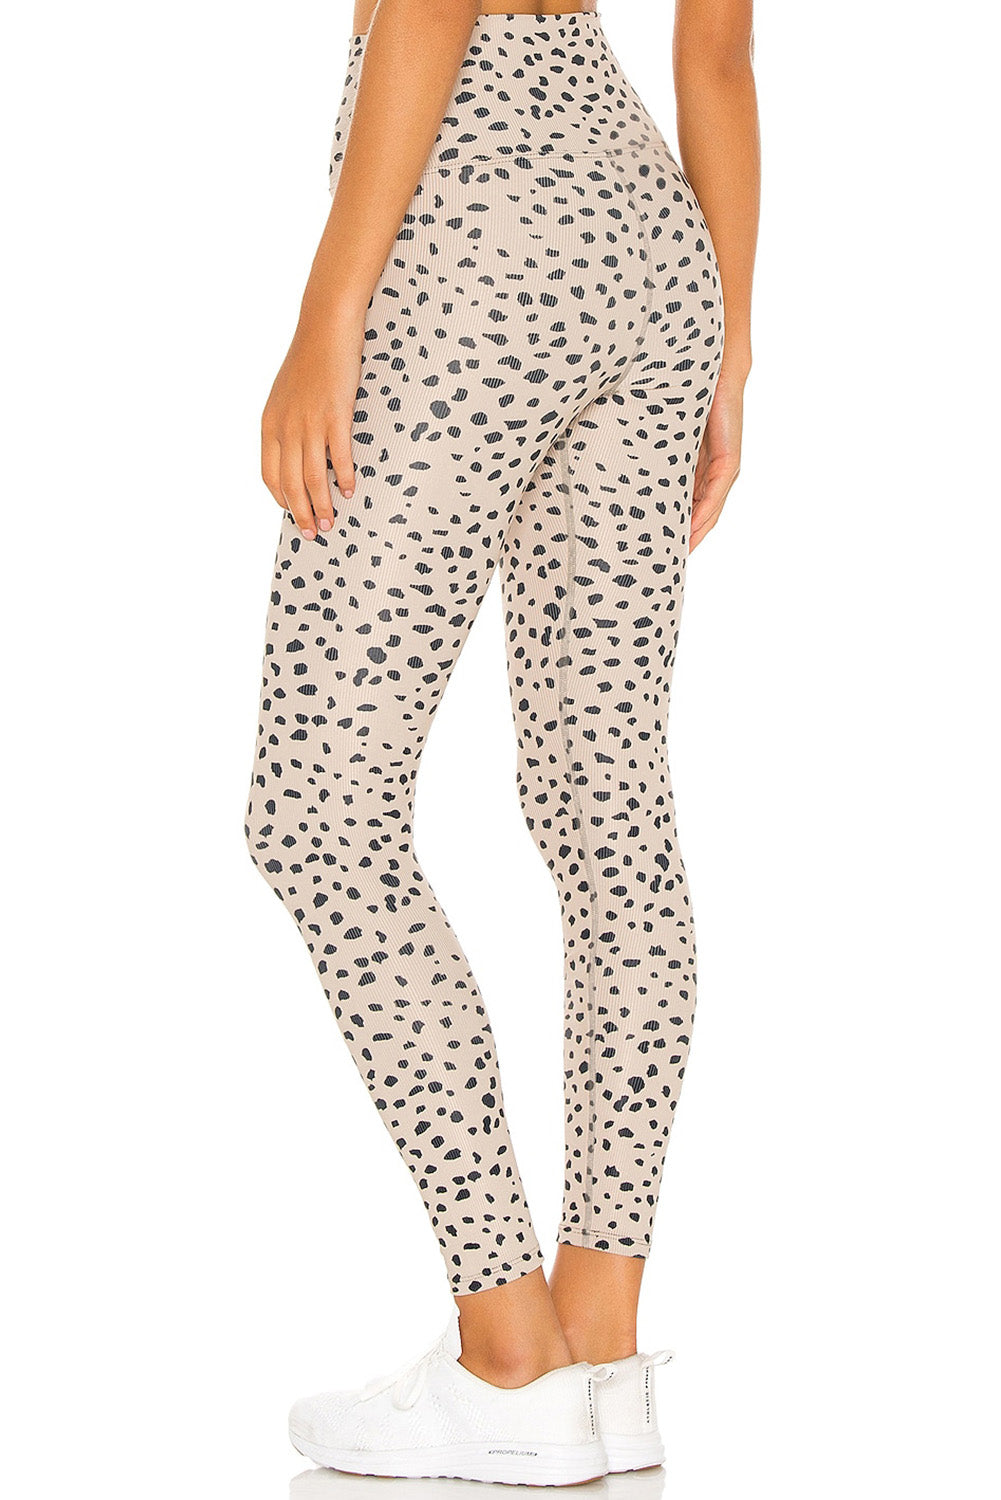 Dalmatian Spots Printed Stretchy High Waist Leggings